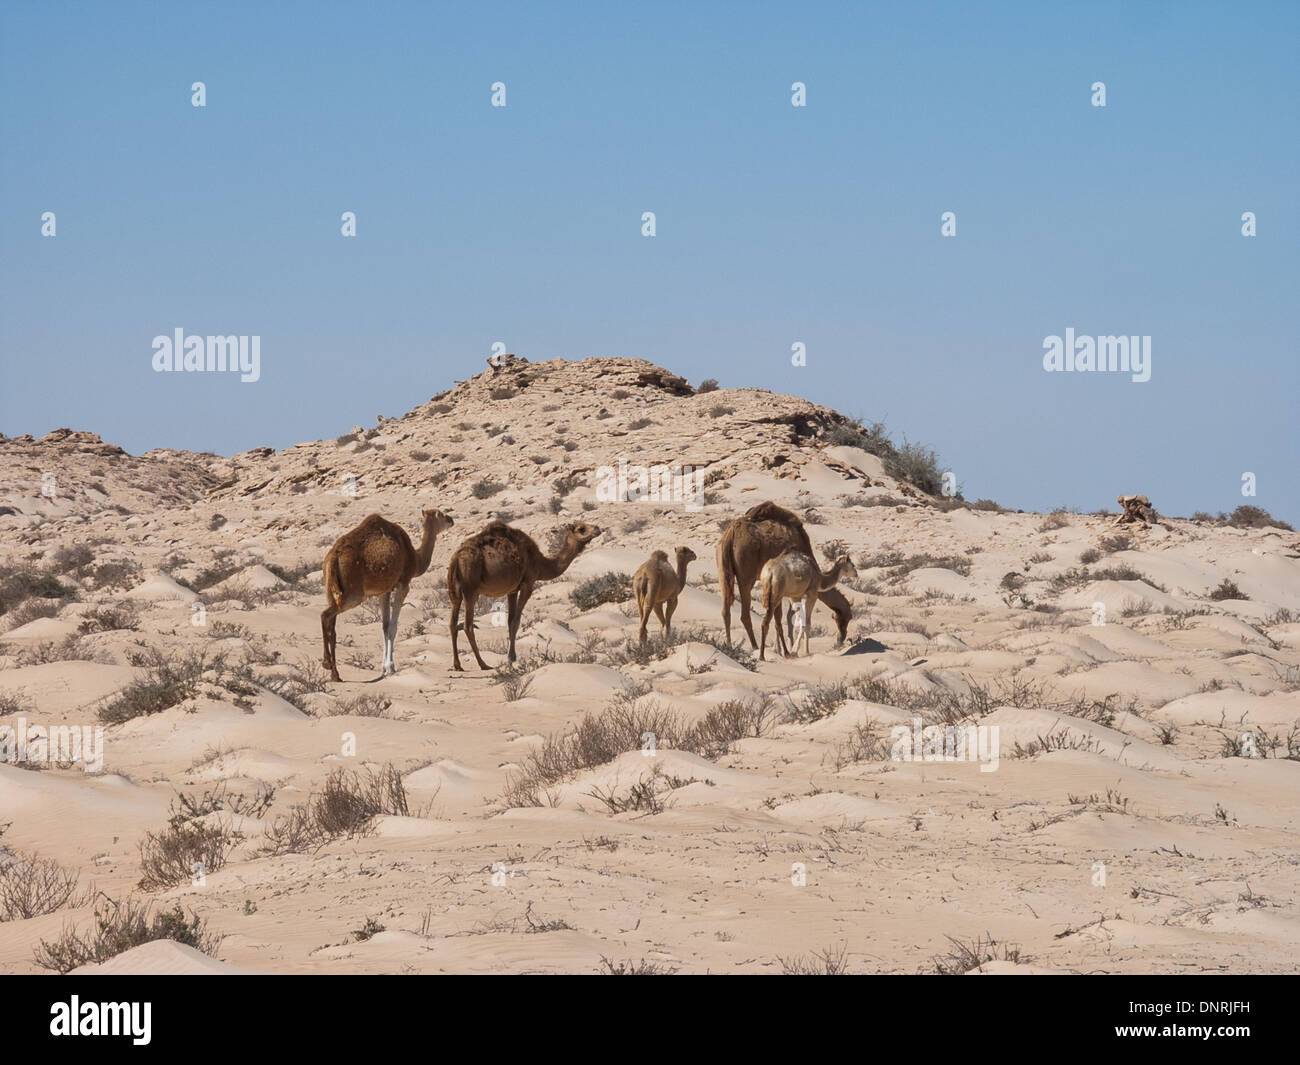 Herd of camels in the Sahara desert Stock Photo